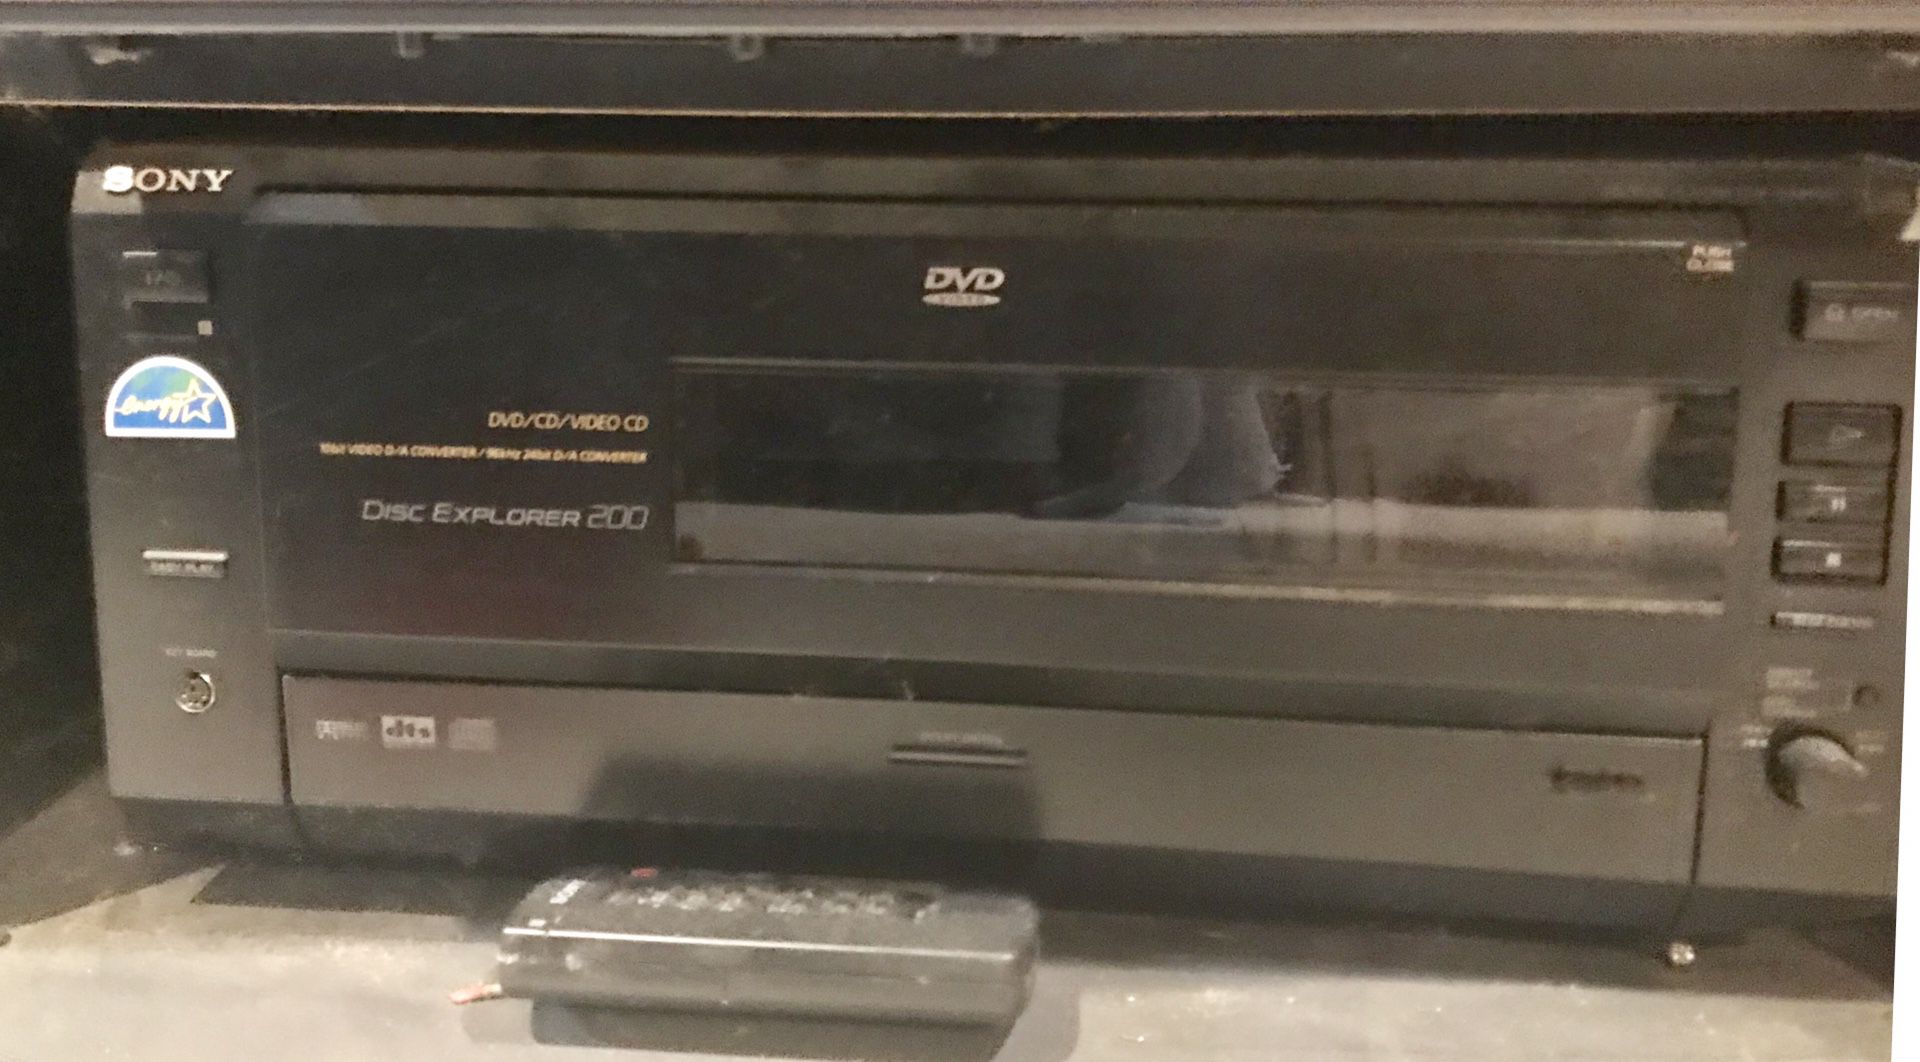 Sony DVP-CX850D Disc Explorer 200 DVD CD Player